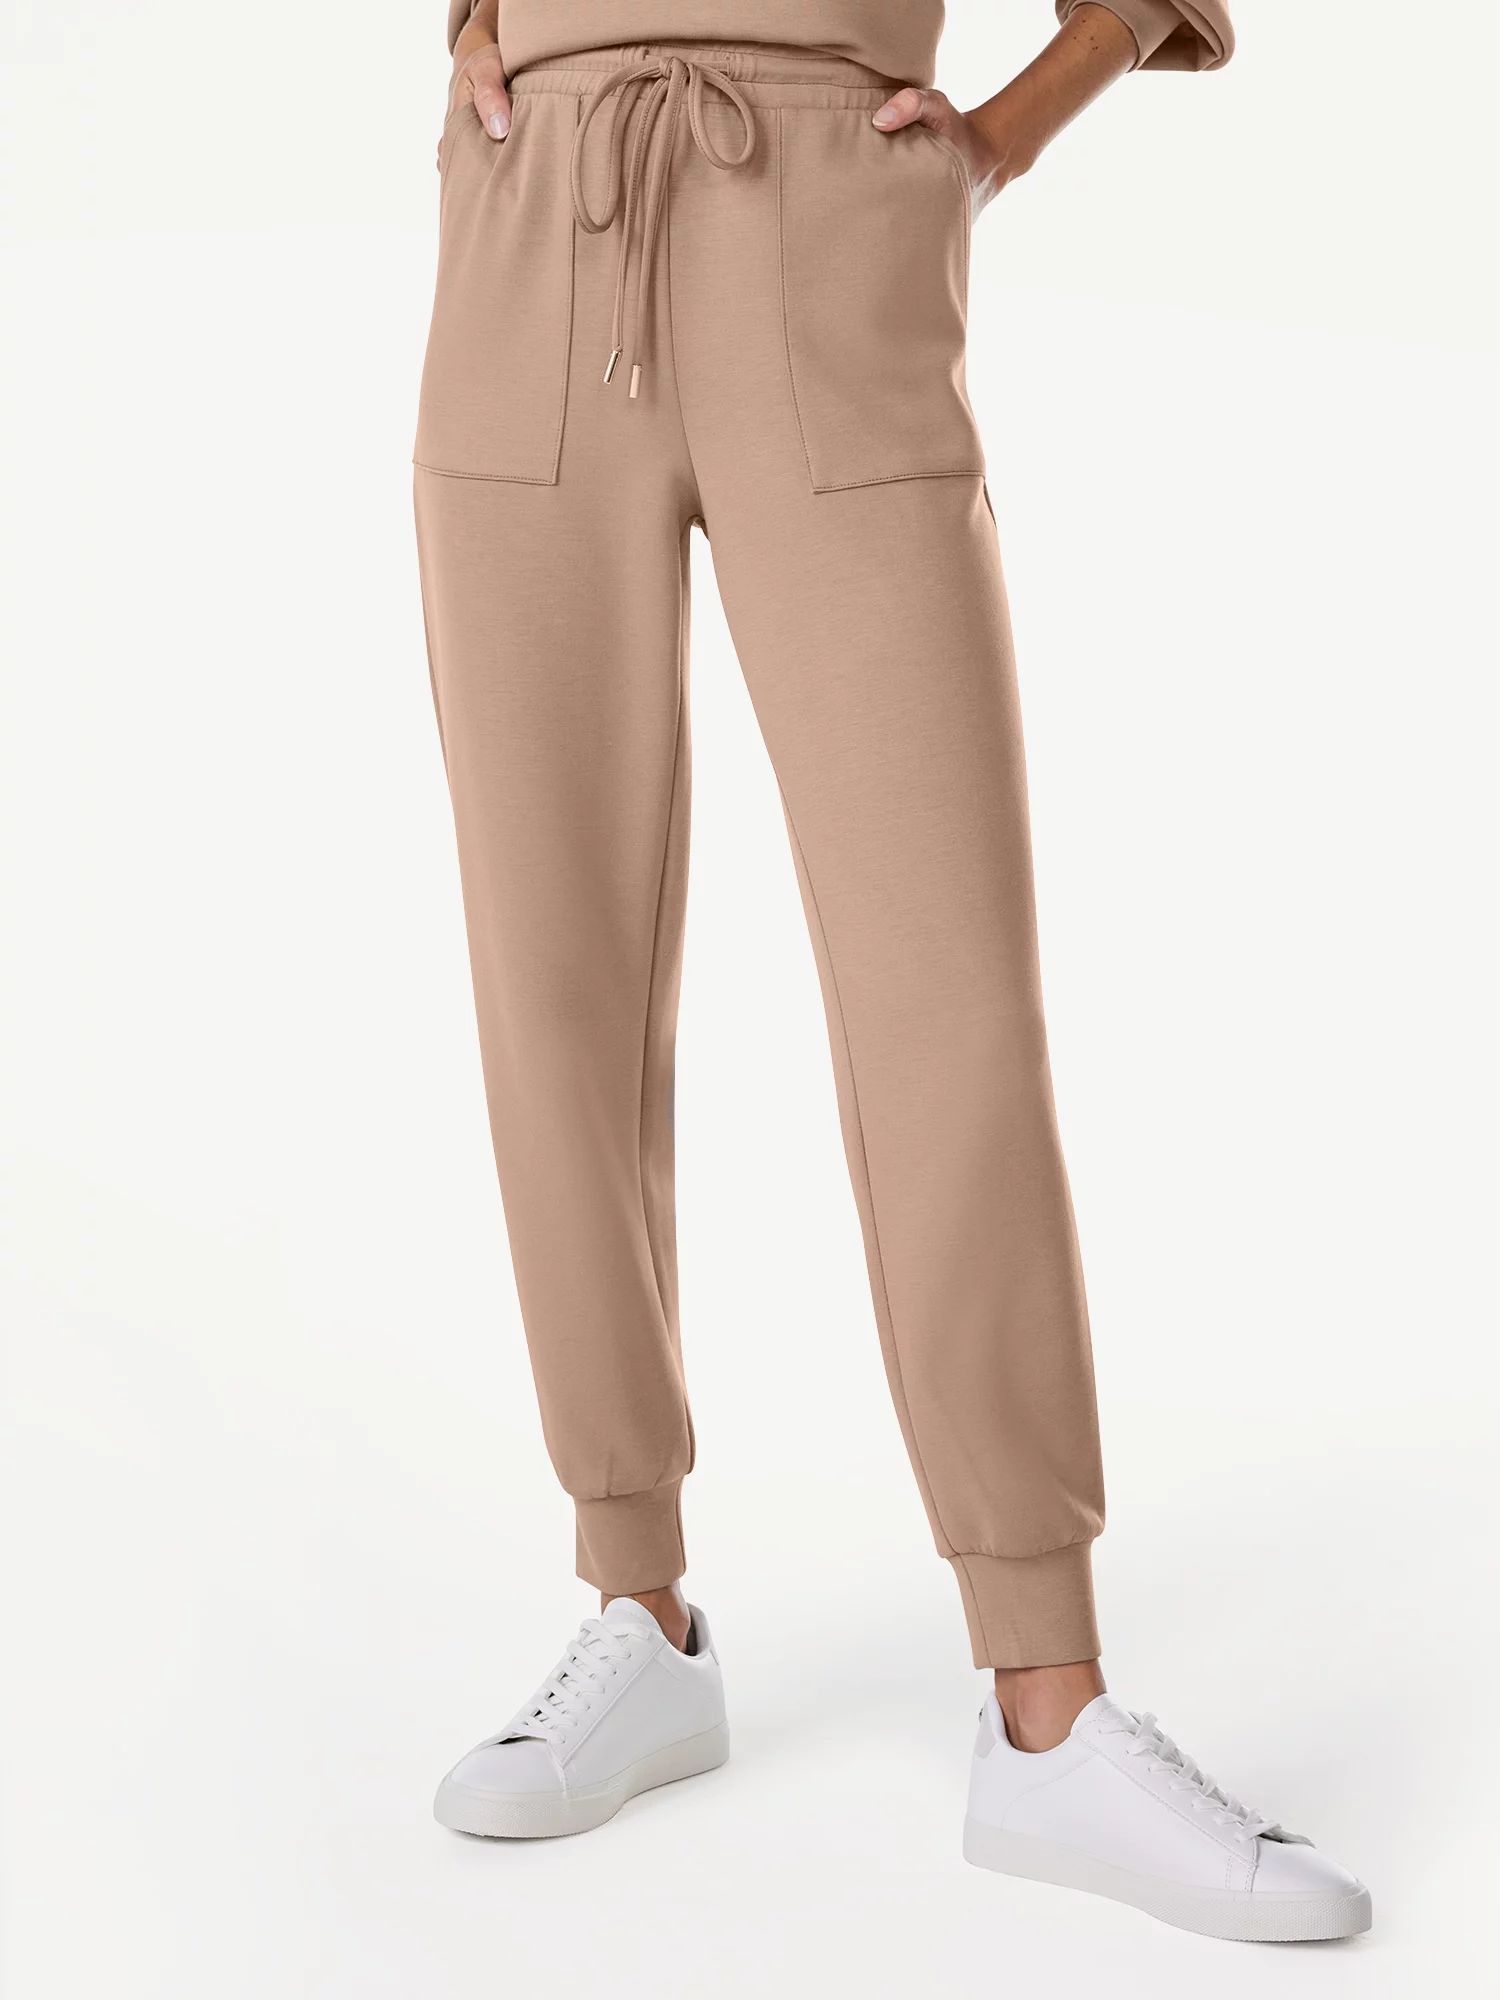 Scoop Women's Ultimate Scuba Knit Pants with Pockets, Sizes XS-XXL | Walmart (US)